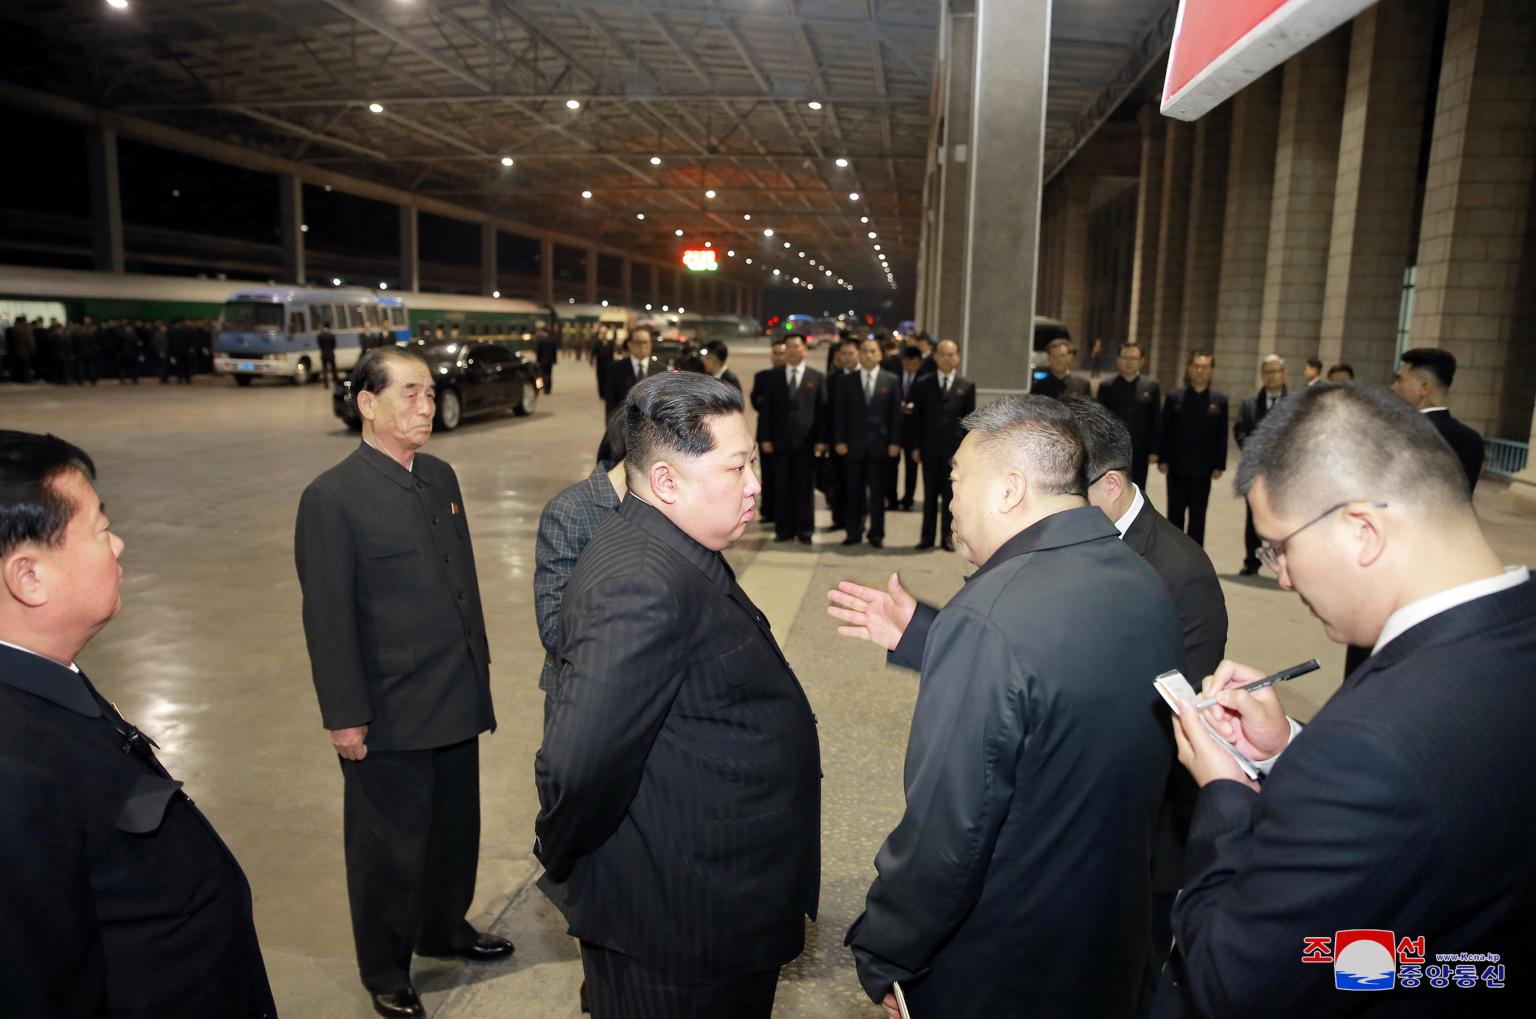 North Korea offers deep apologies to China over deadly bus crash